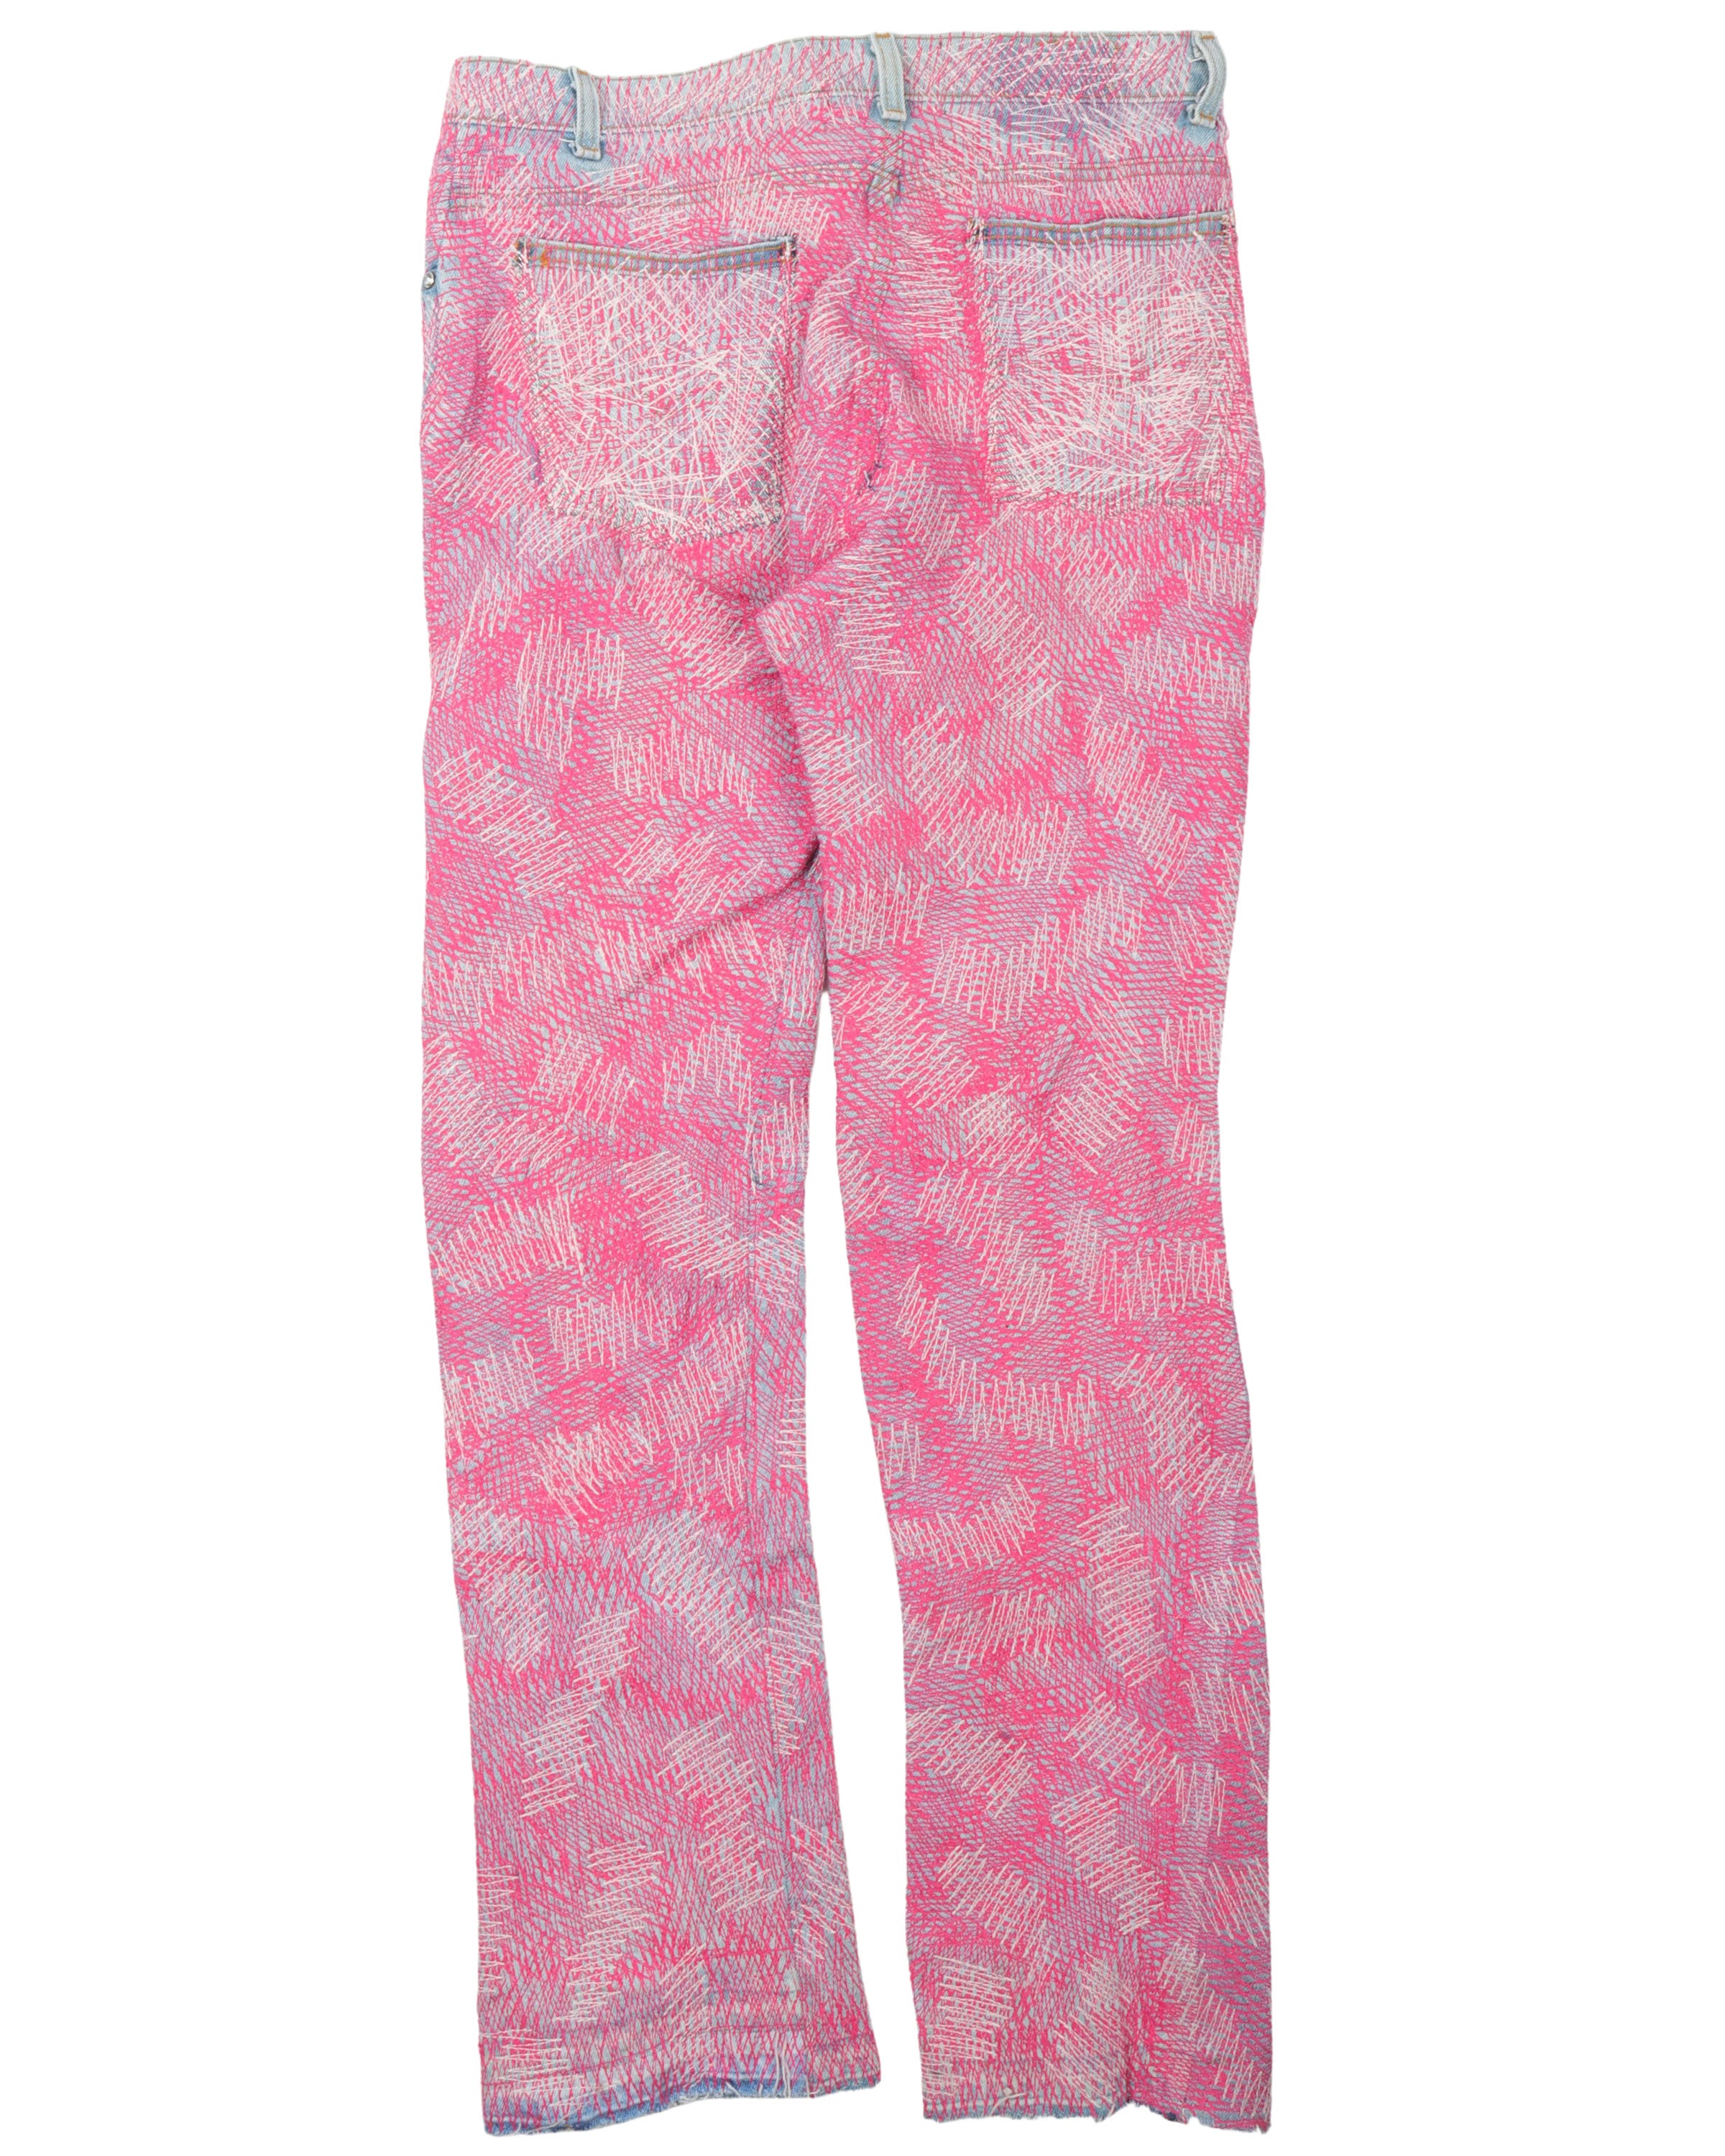 Circus Stitch Pink Jeans